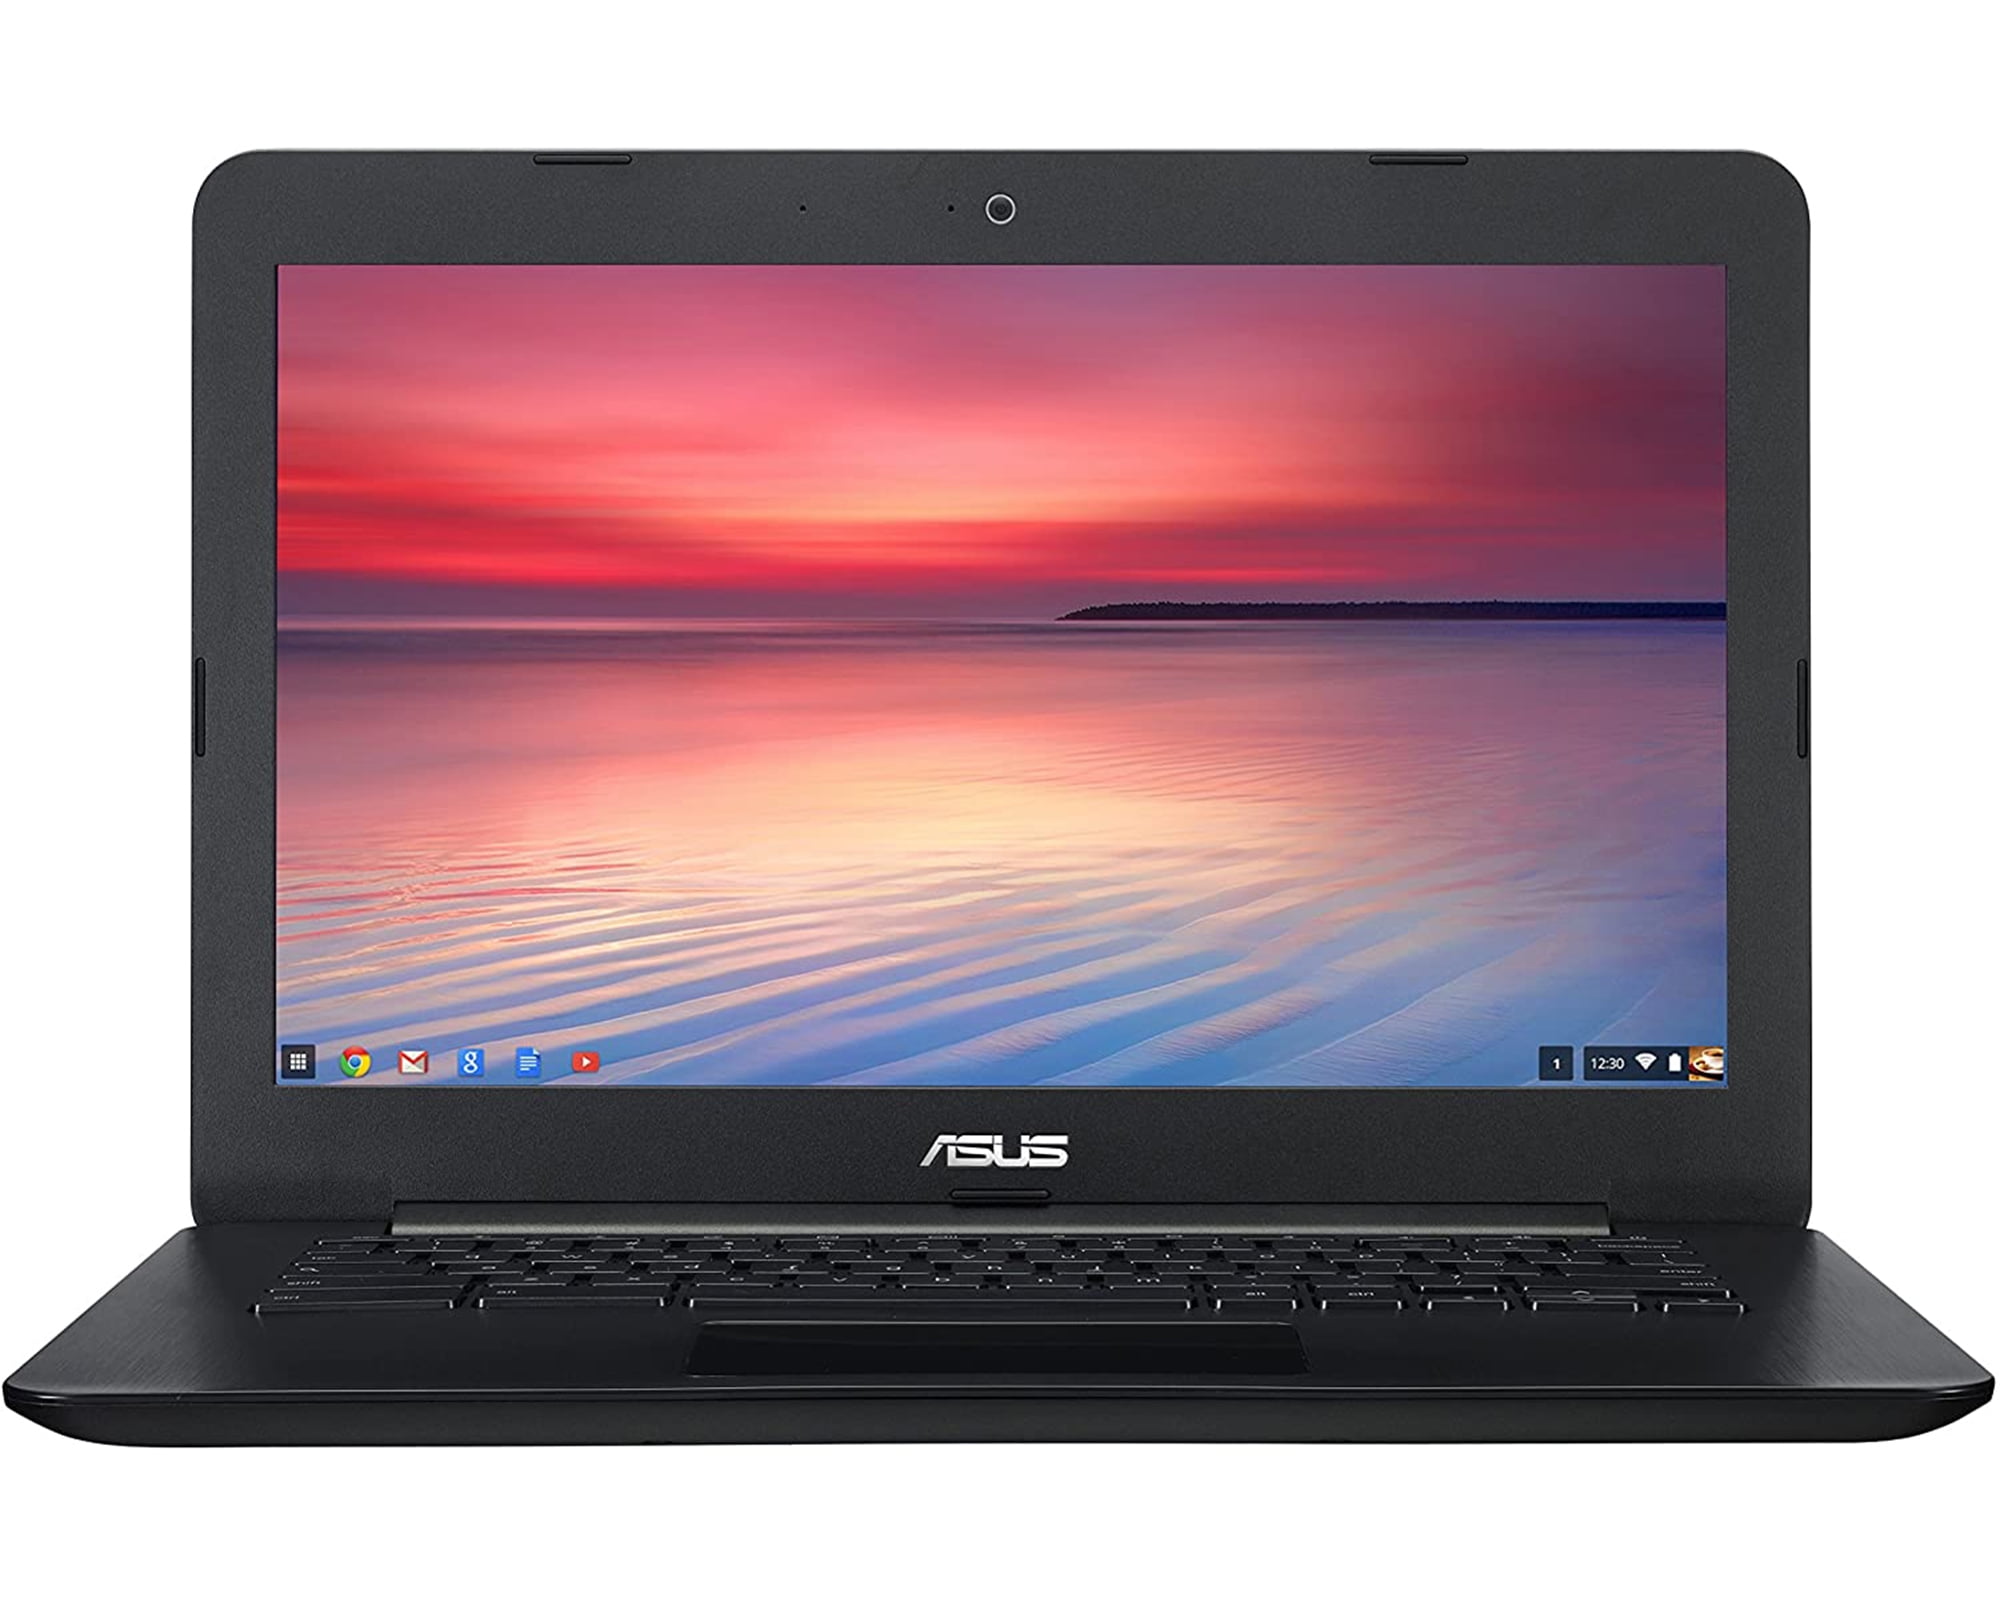 ASUS Chromebook C300M-DH02 Laptop Computer, 2.16 GHz Intel Celeron, 2GB DDR3 RAM, 16GB SSD Hard Drive, Chrome, 13" Screen (Refurbished)